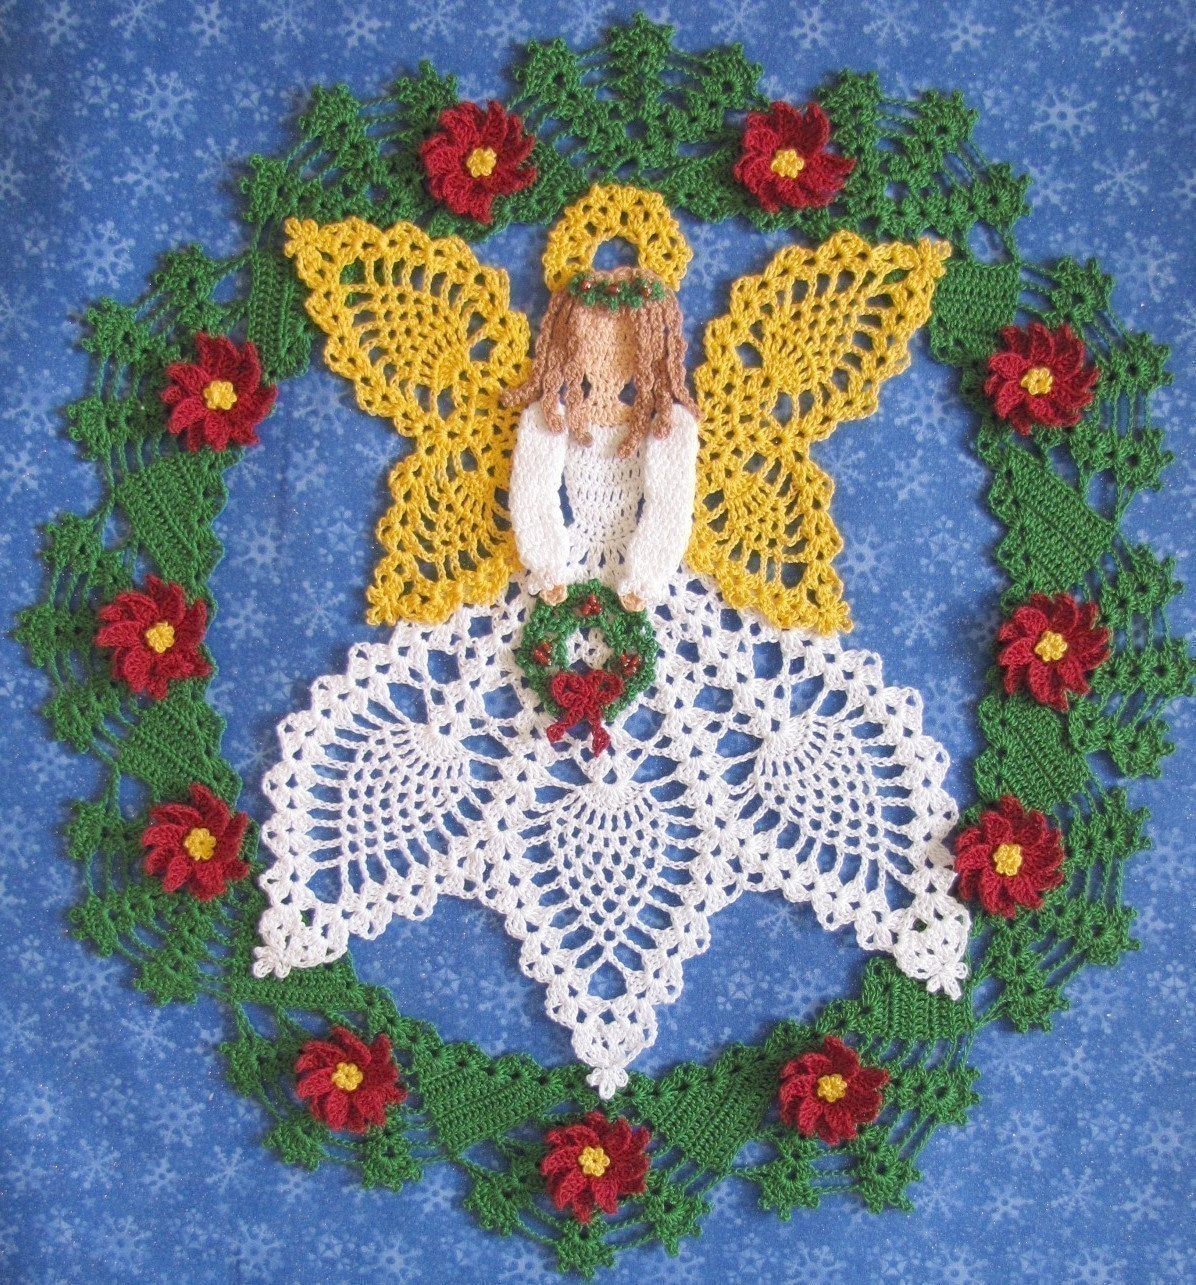 Pretty Crochet Doily - Christmas Crafts, Free Knitting Patterns